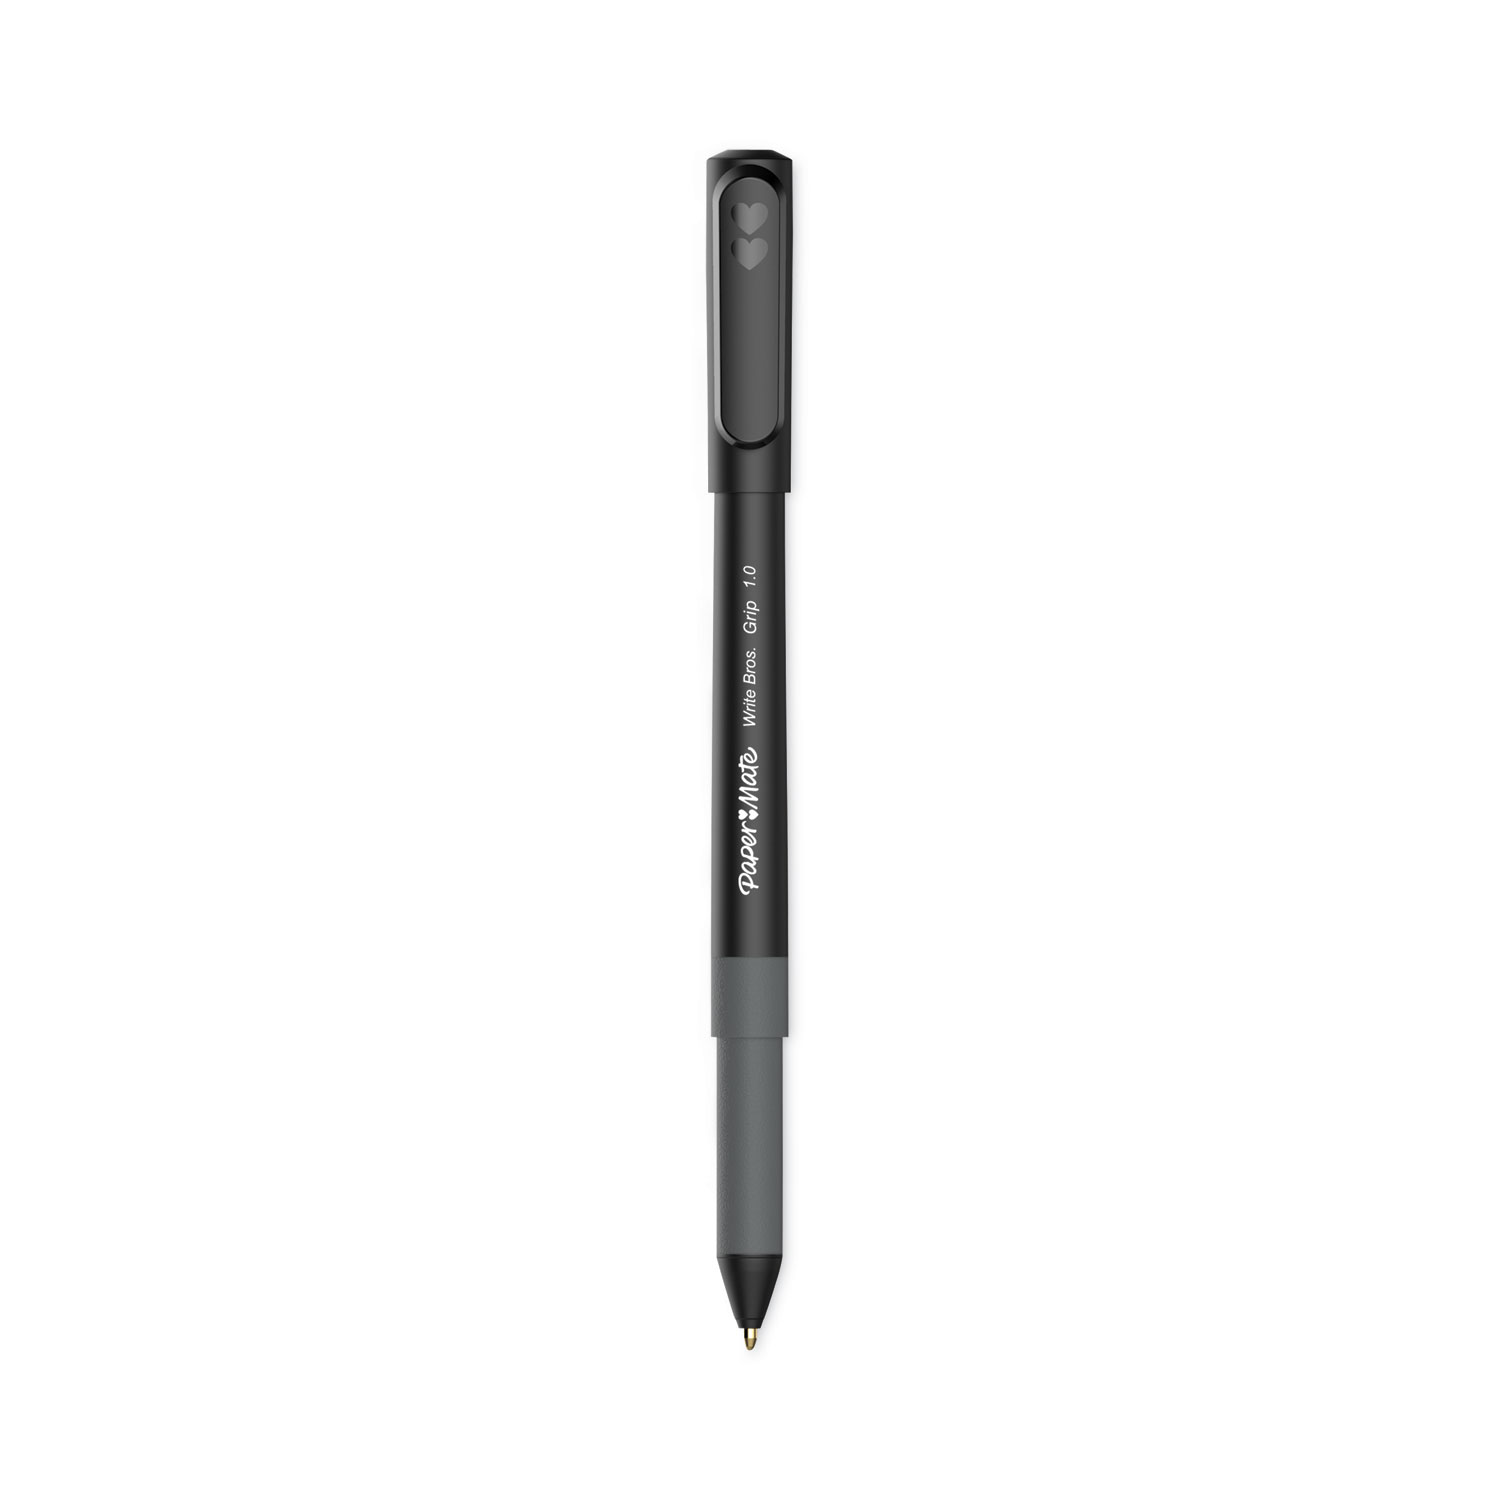 Ballpoint Pens Medium Point 1mm Black Ink Work Pen With Super Soft